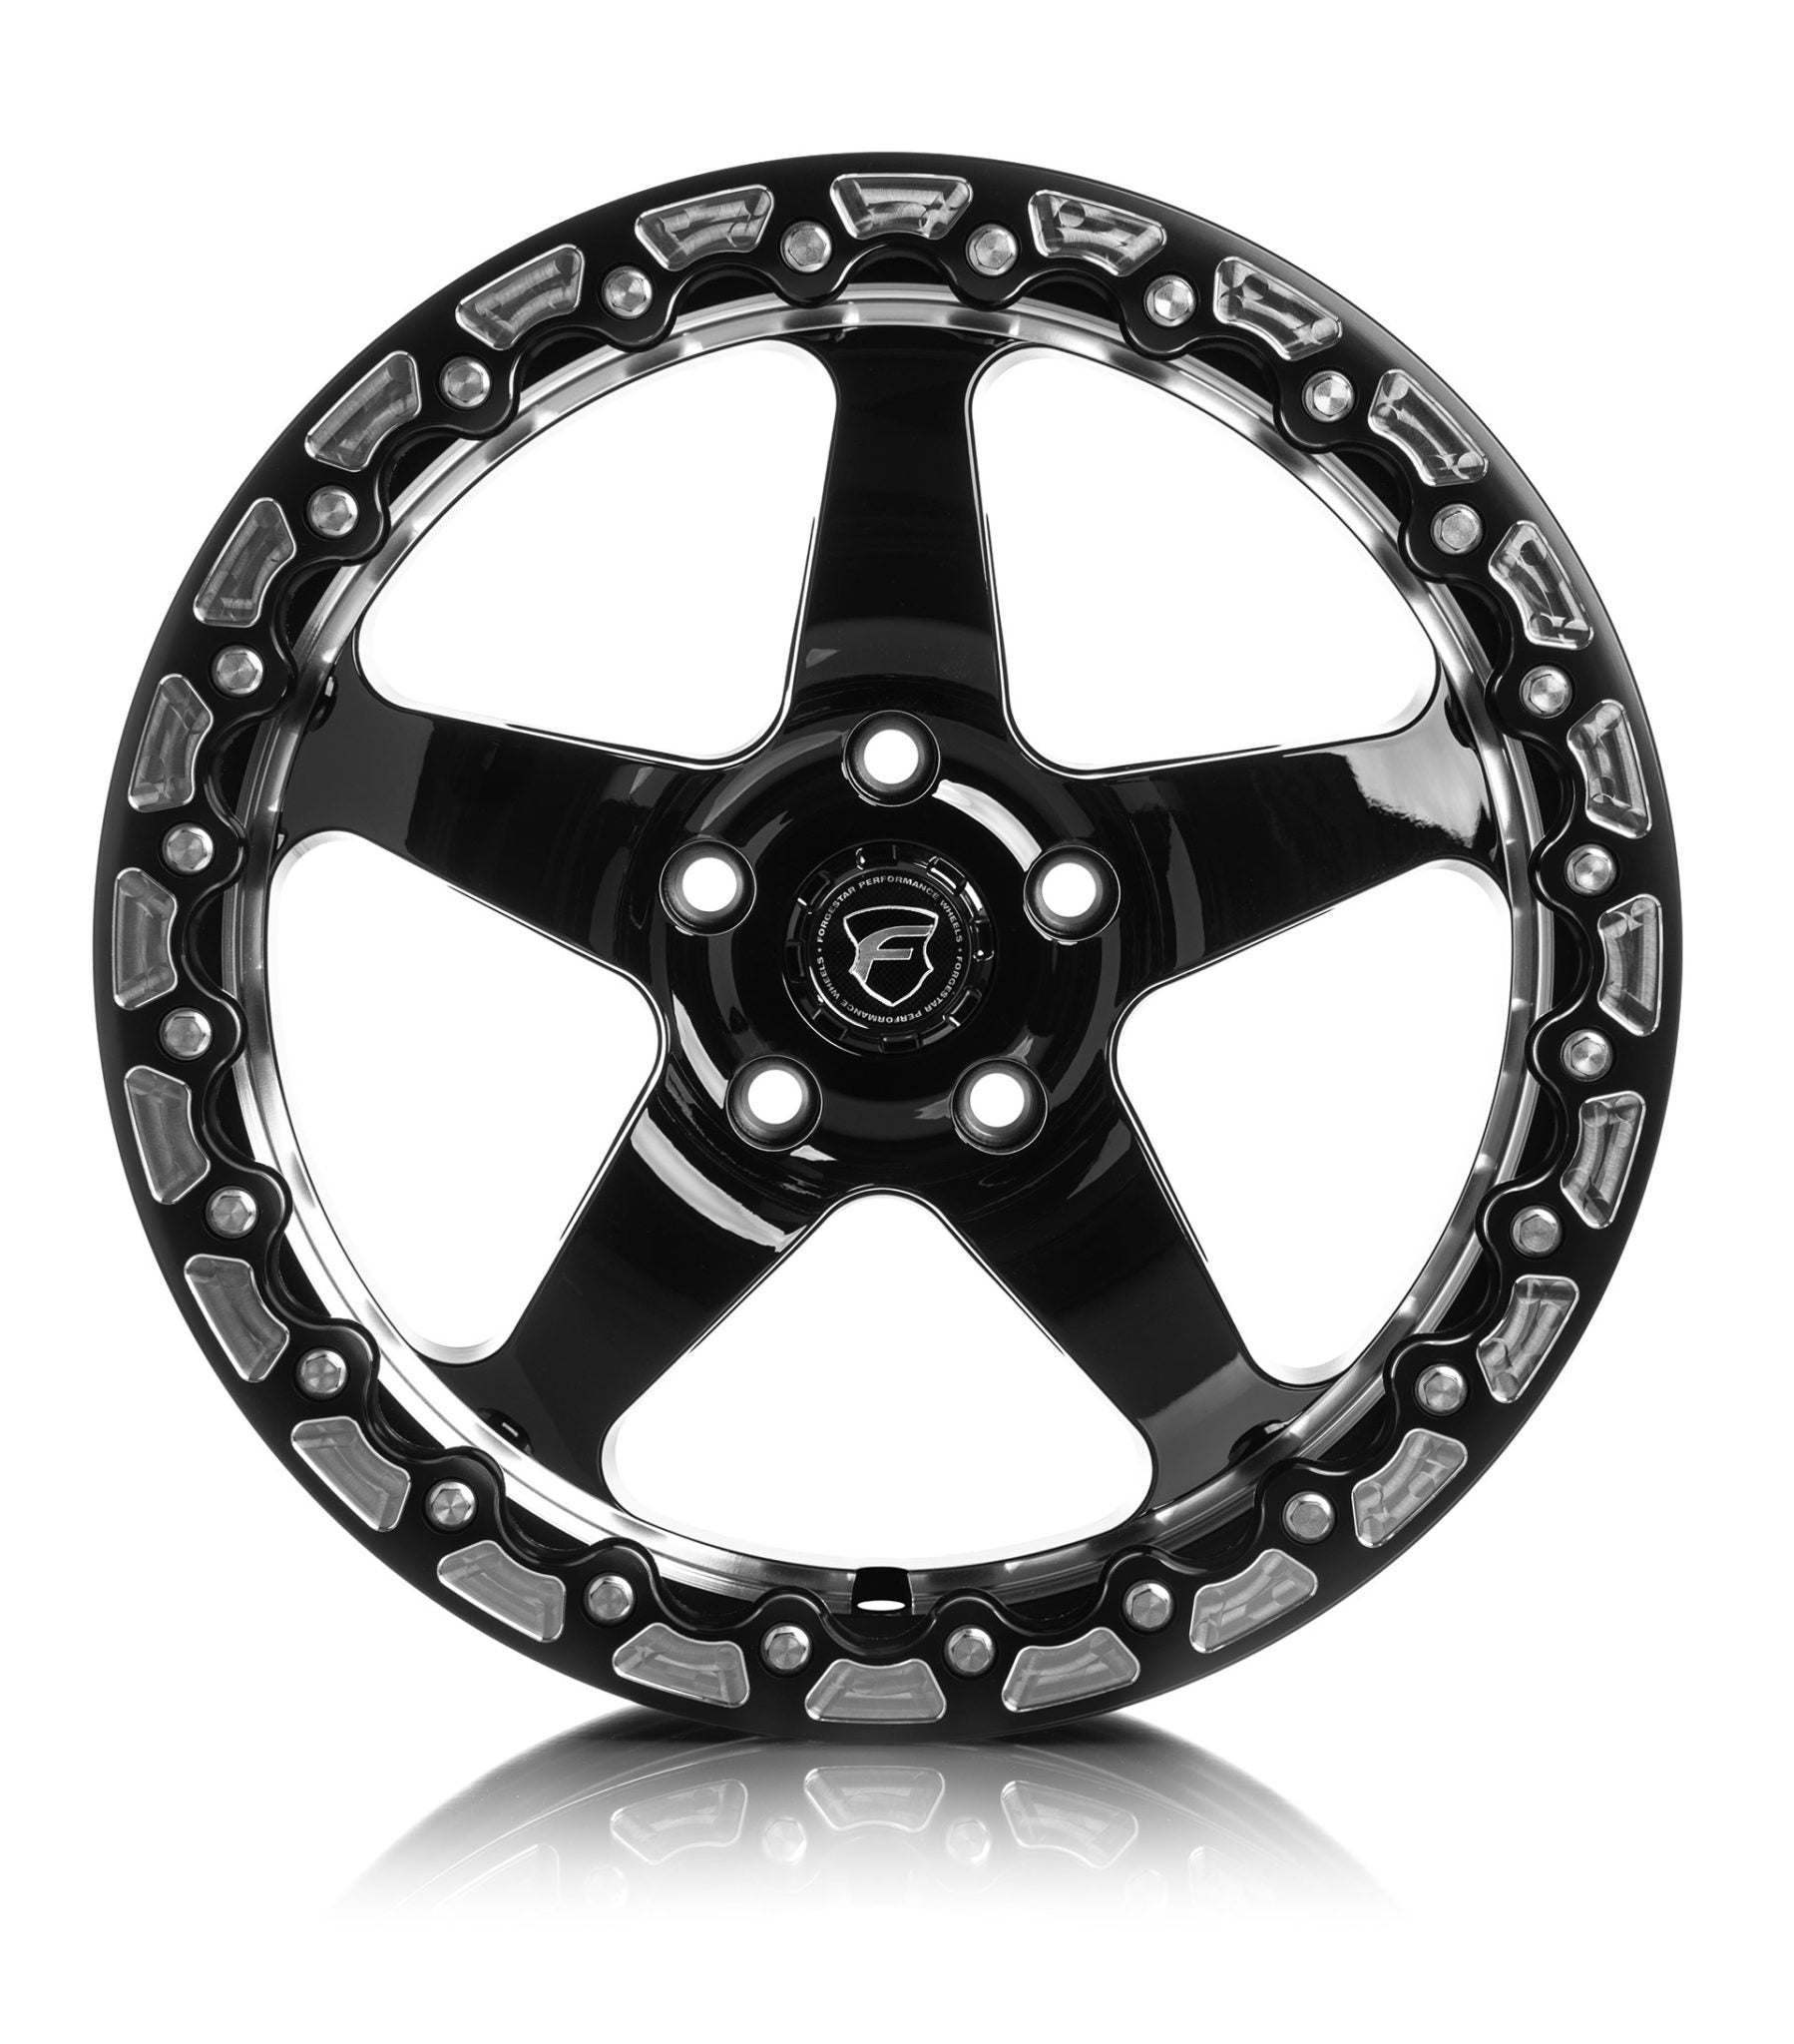 Forgestar D5 BEADLOCK Drag Racing Wheels - Gloss Black w/Machined Lip - 18x11 - Sold Individually - Motorsports LA